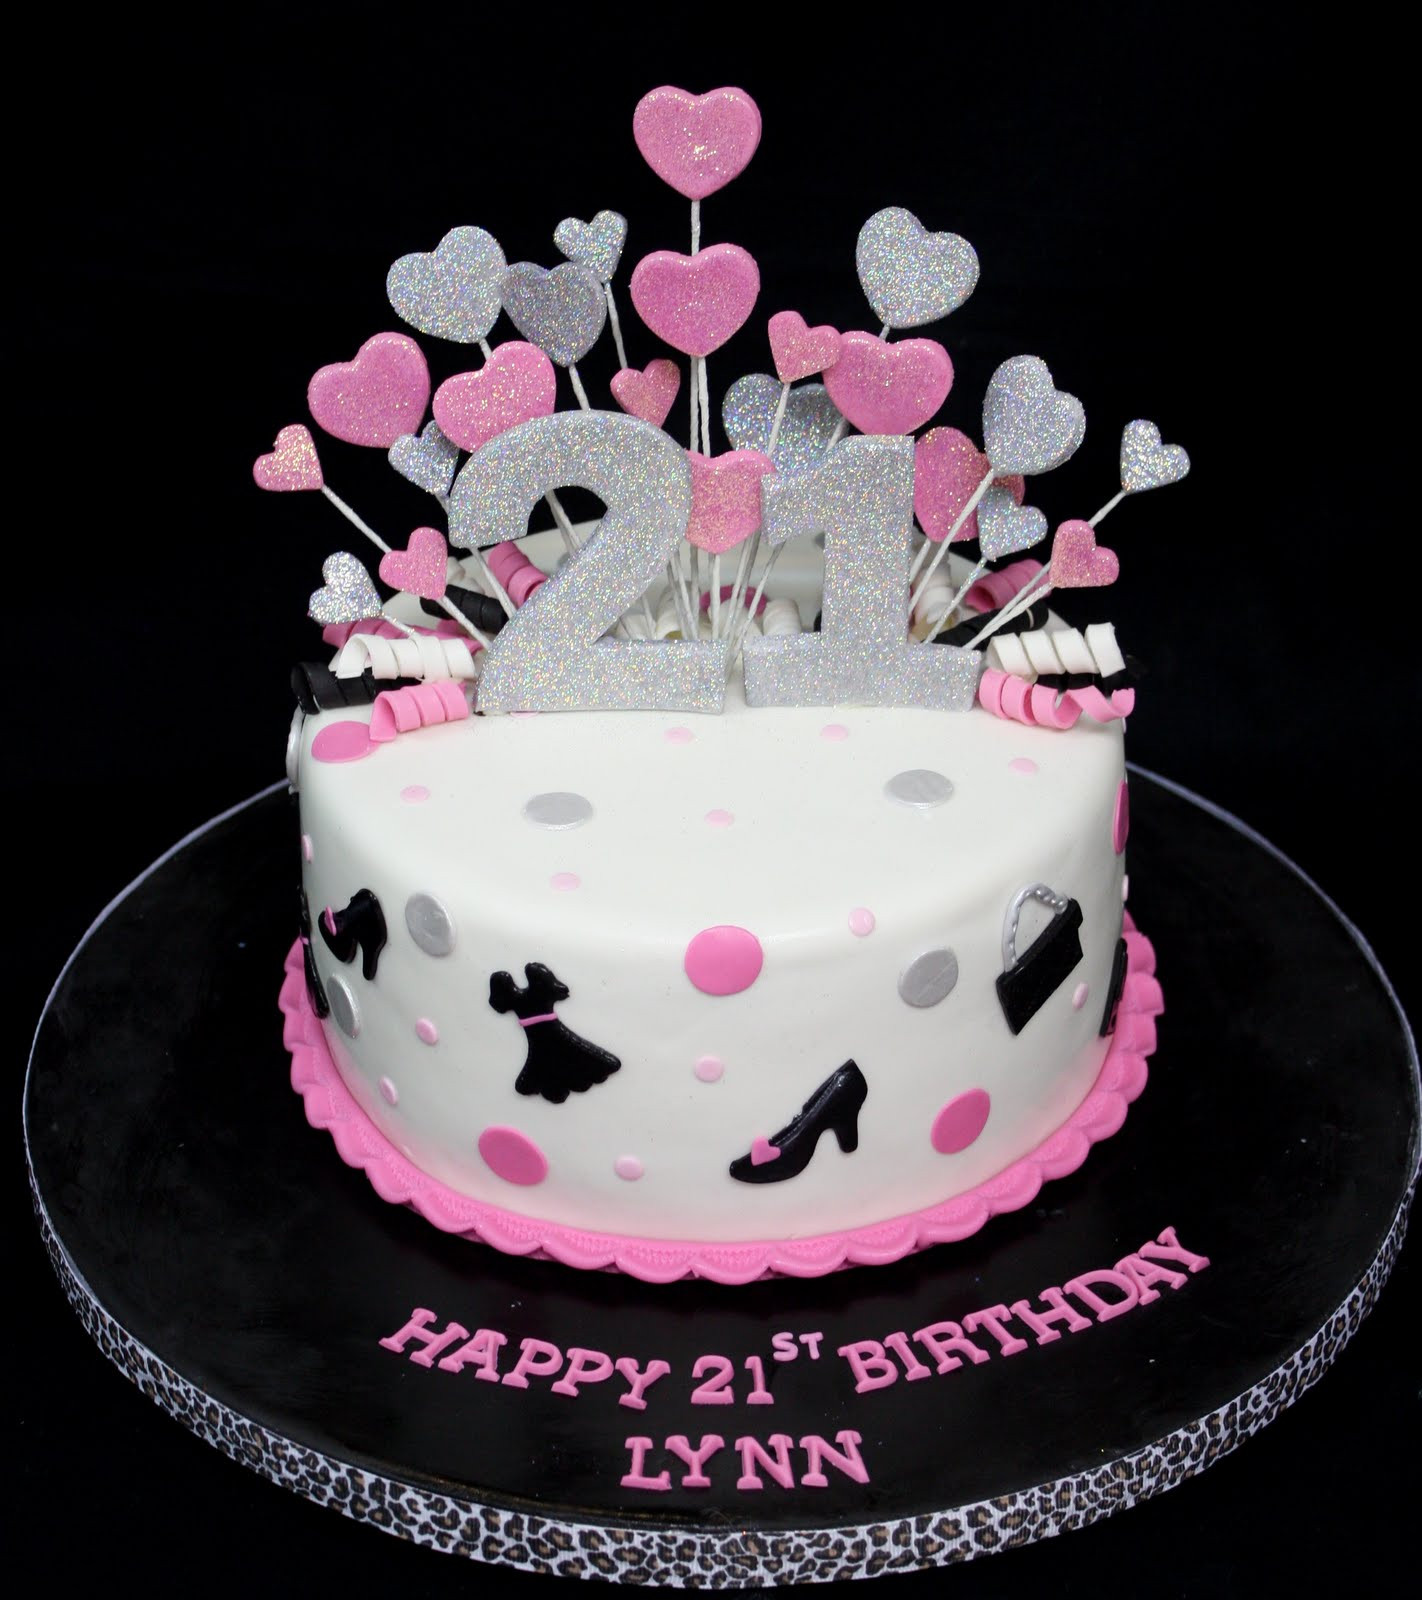 Best ideas about 21st Birthday Cake
. Save or Pin plete Deelite Fashion Glitter 21st Birthday Cake Now.